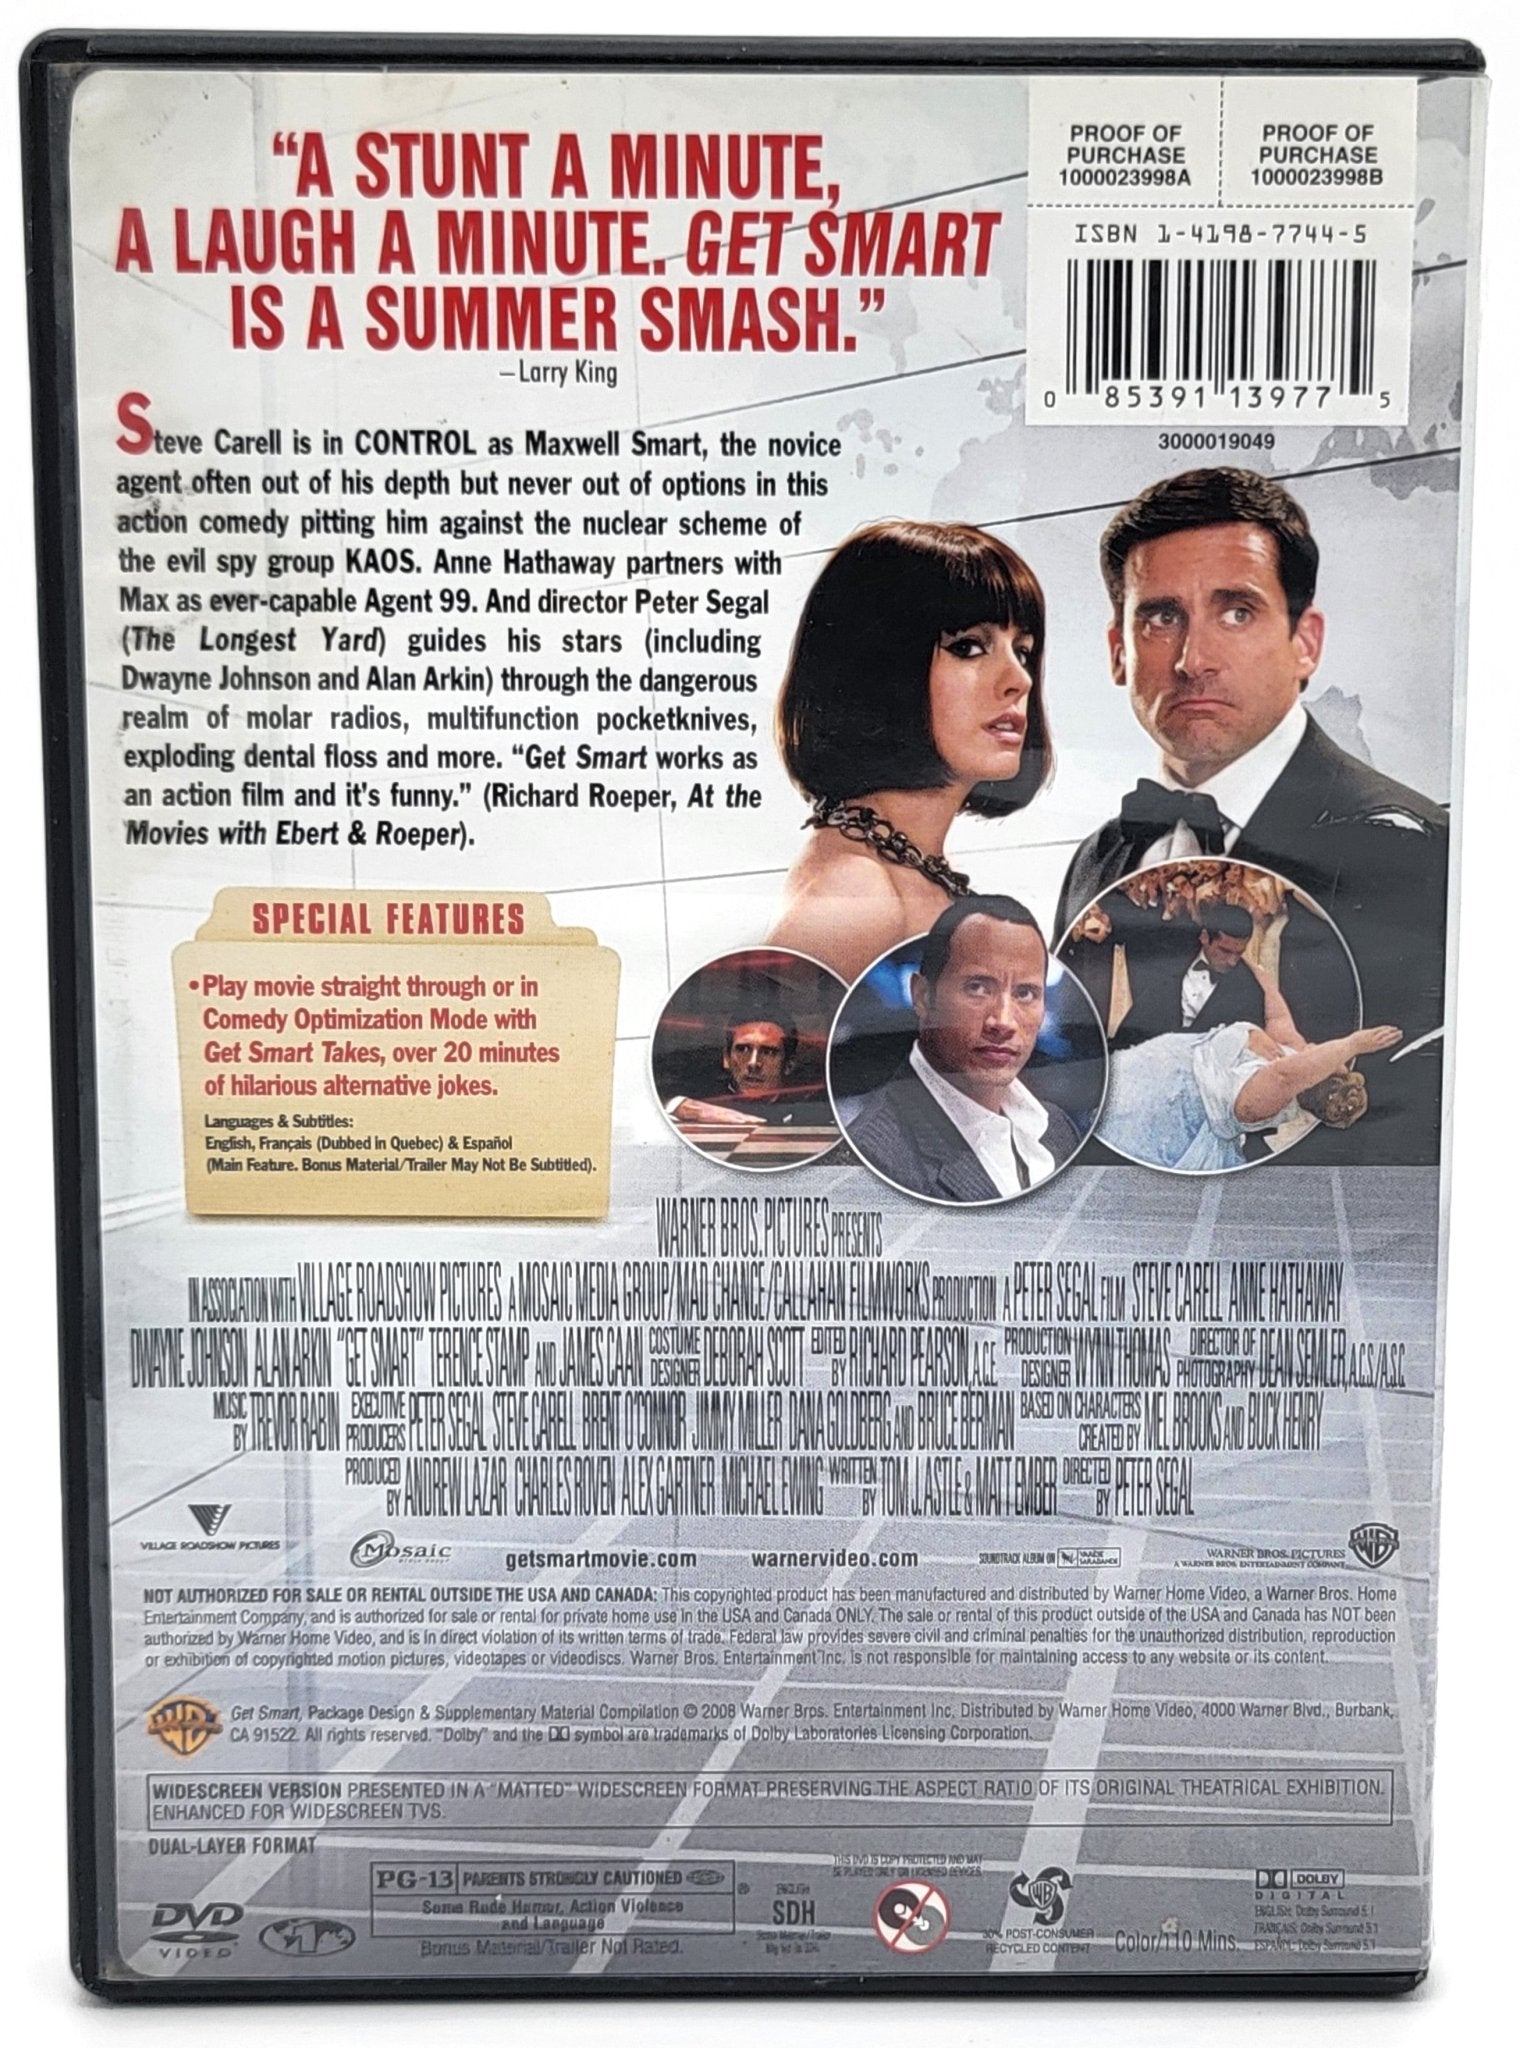 Warner Brothers - Get Smart | DVD | Widescreen - DVD - Steady Bunny Shop